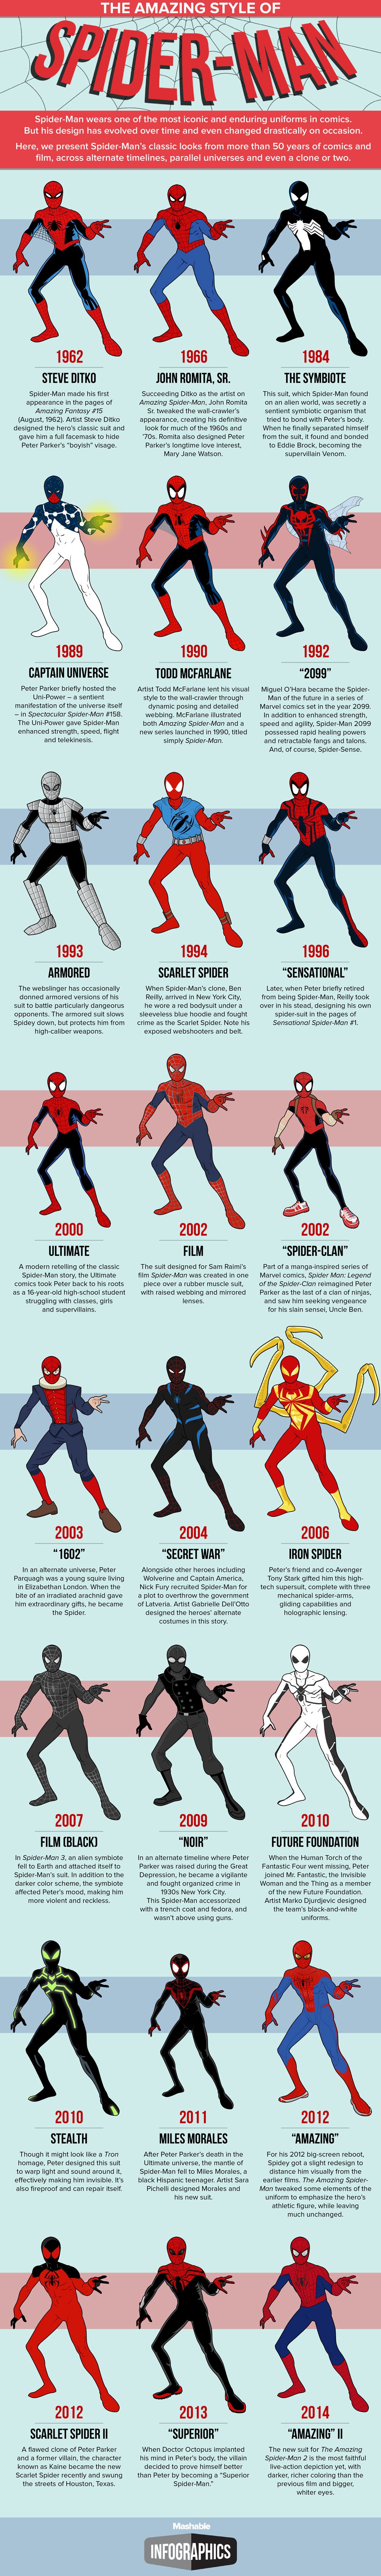 Spiderman's Costumes